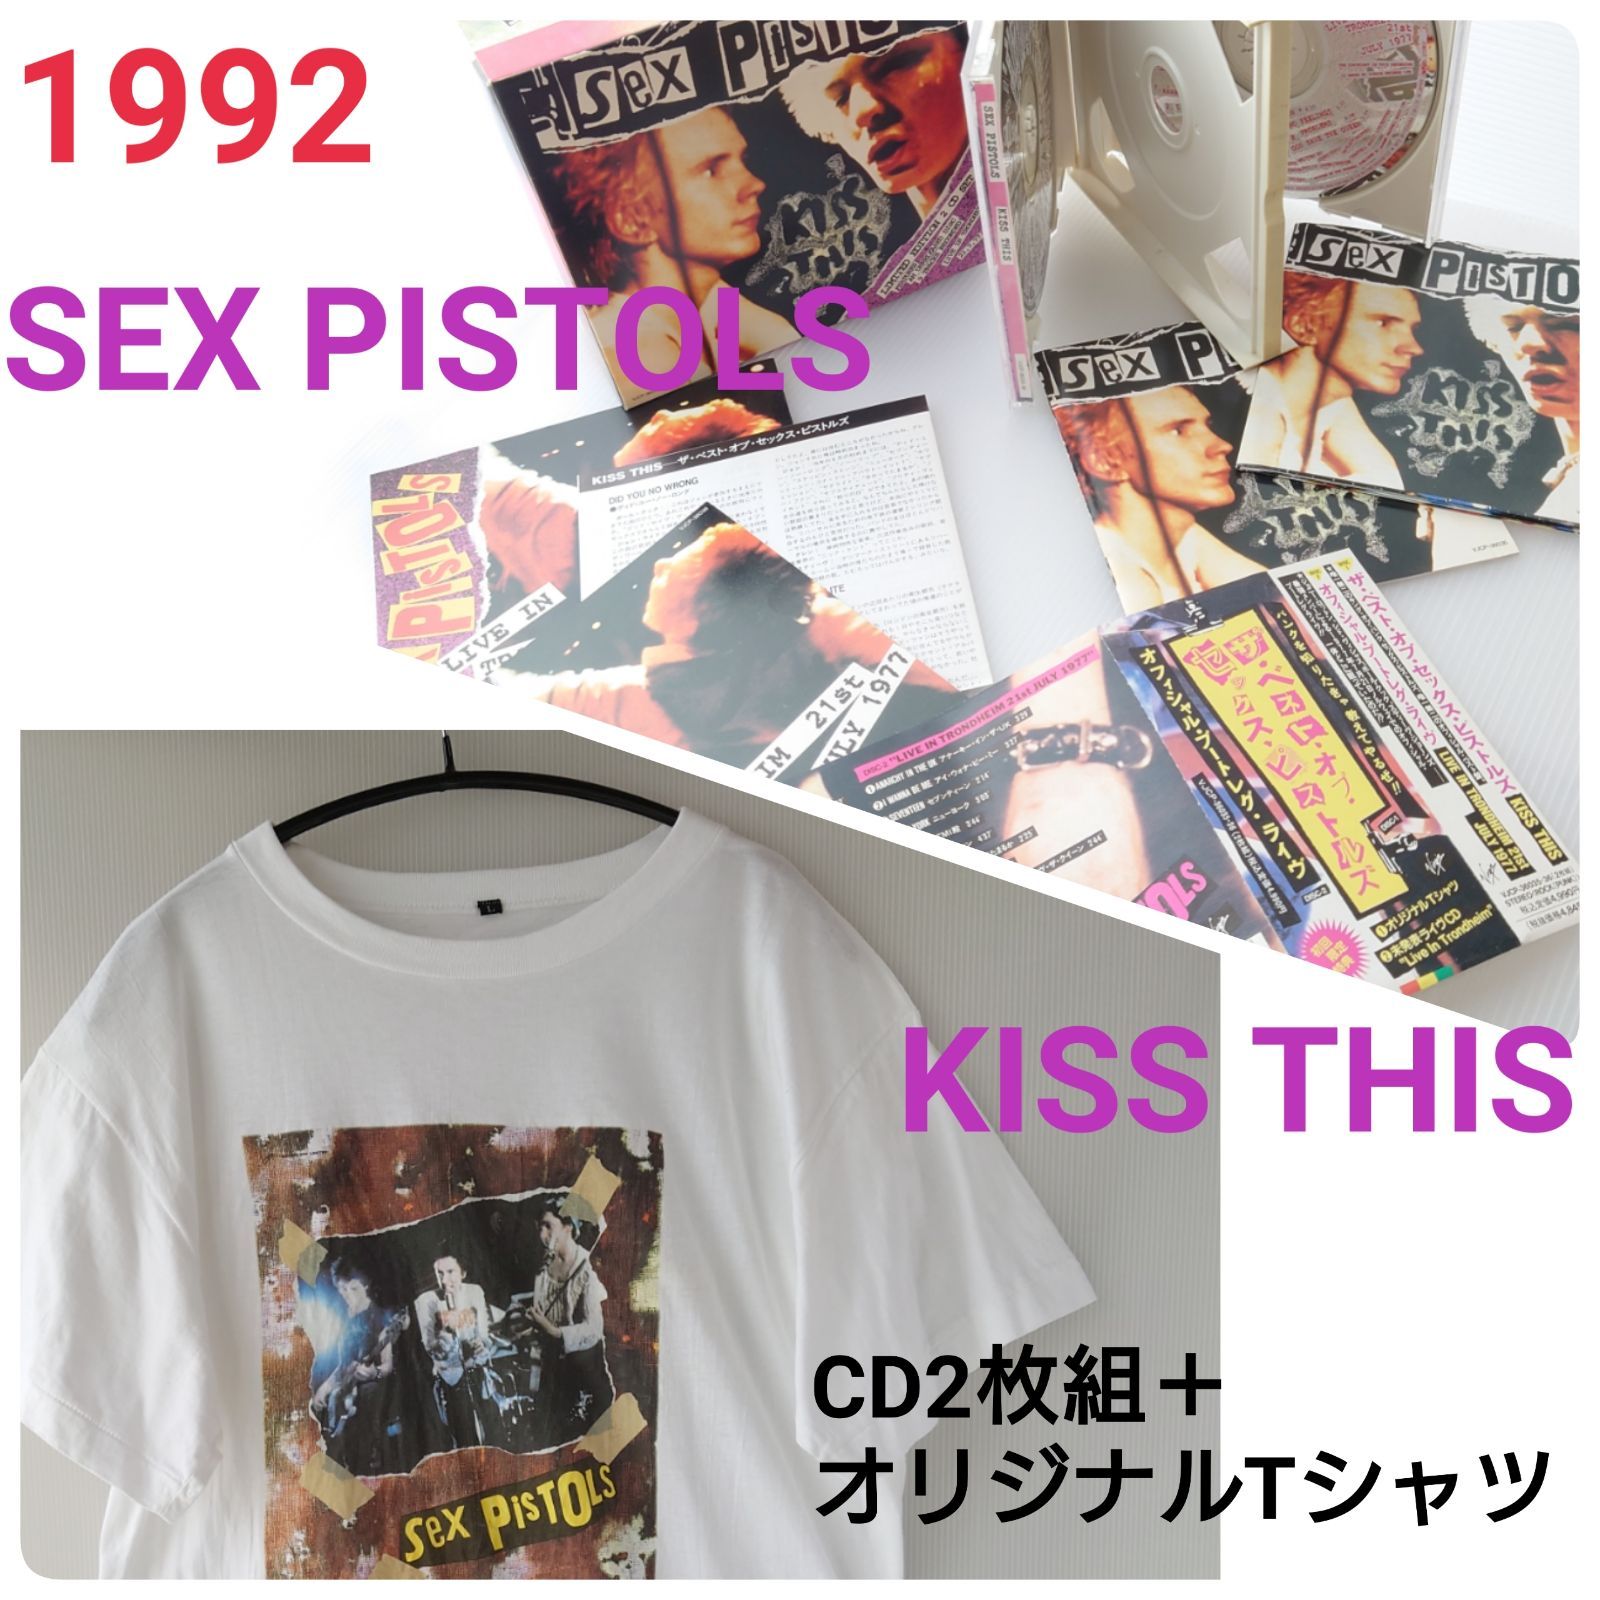 SEX PISTOLS】CD2枚組＋Tシャツ【1992】 - メルカリ